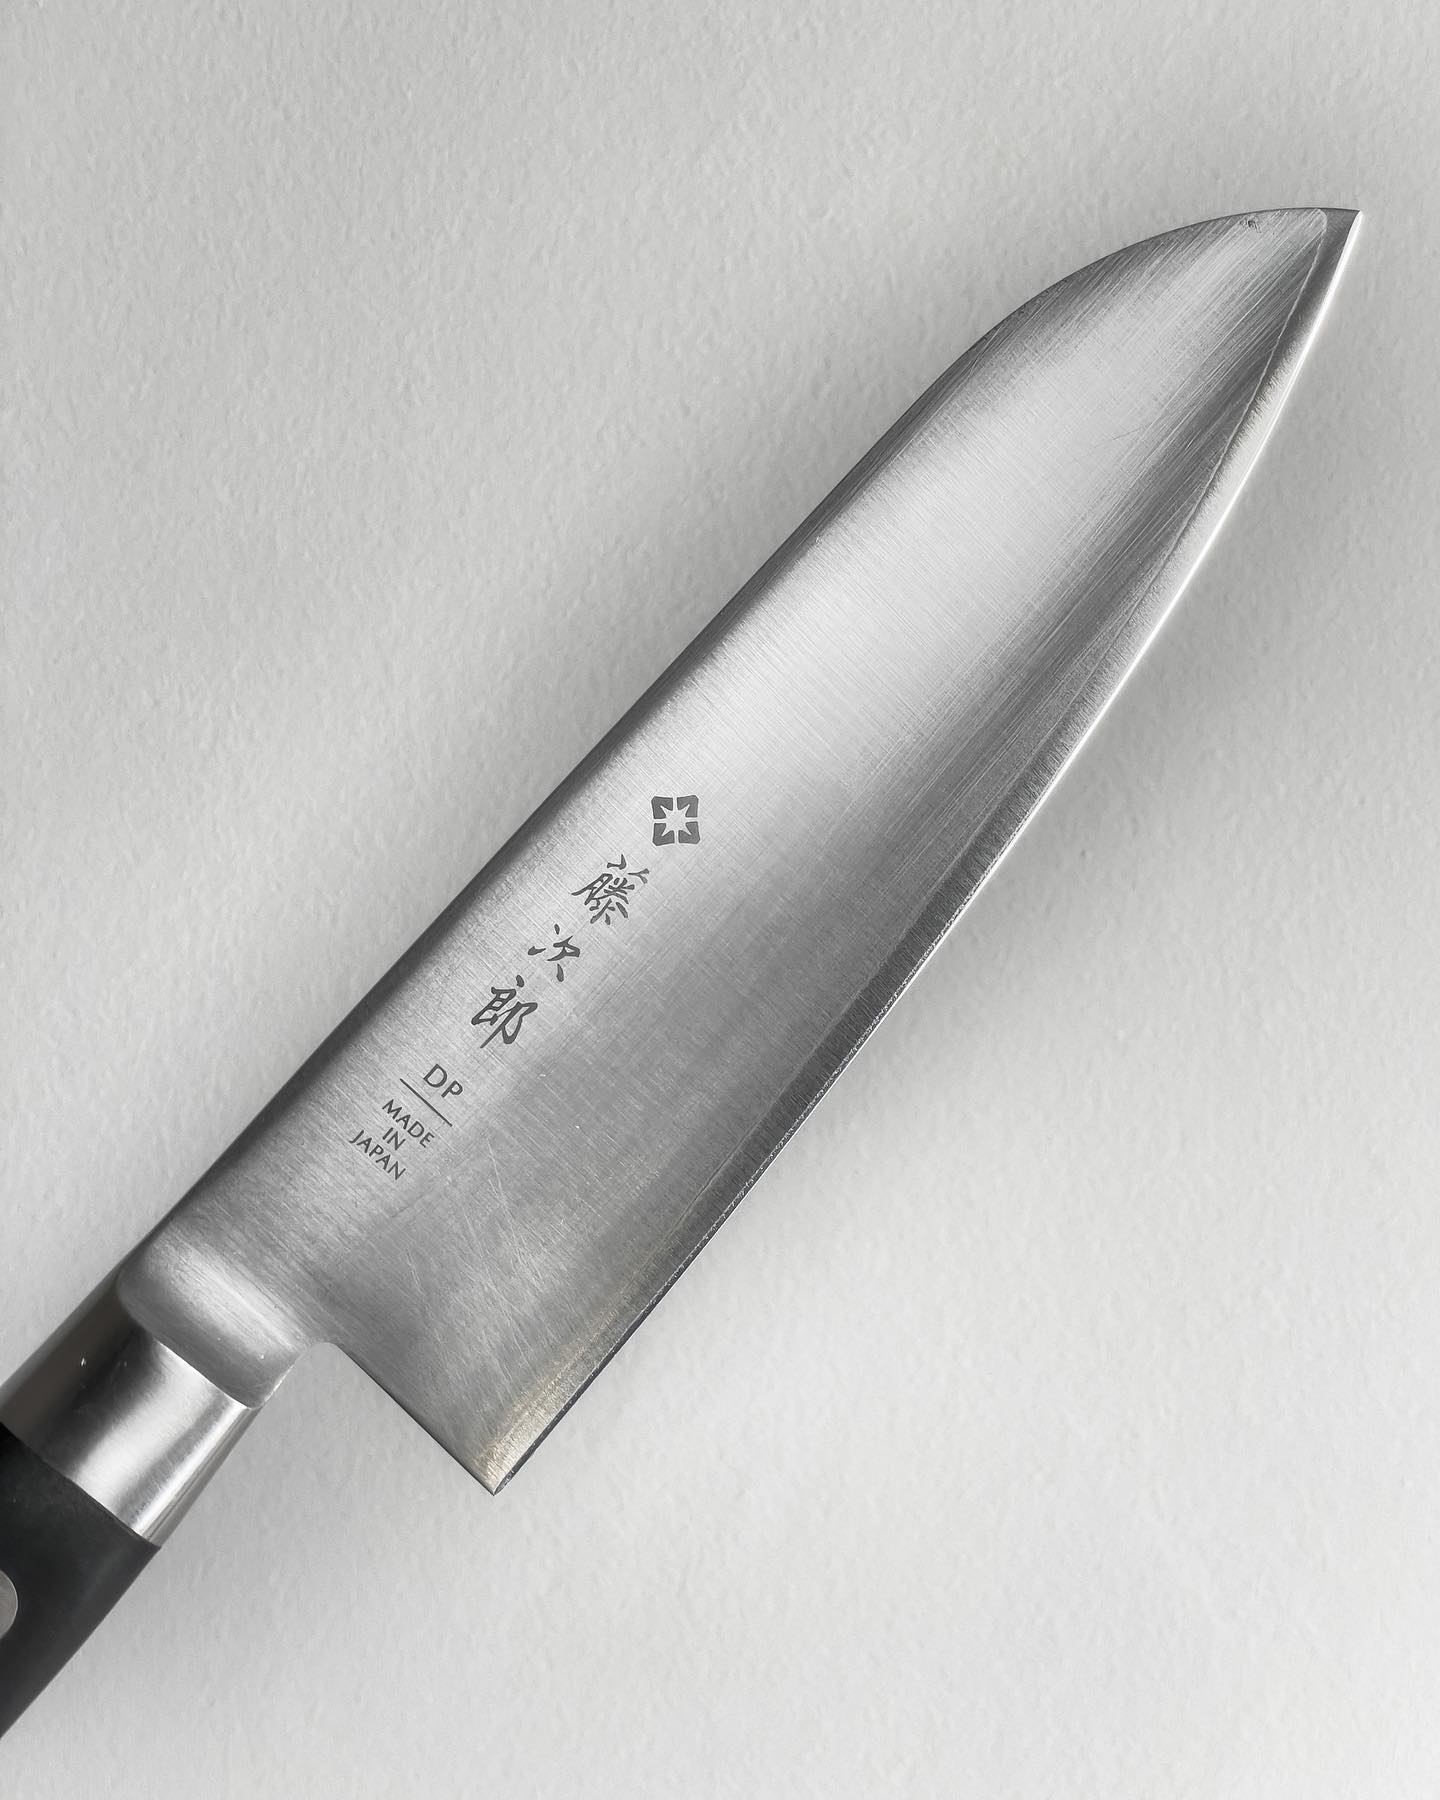 Afilado para este @tojiro_jp Santoku!
Cliente: Daniel

.
.
.
#teloafilo #afilado #cuchillo #piedra #filo #cocina #cuchillosjaponeses #cocinero #restaurant #chef #santiago #chile #instachile #chilegram #corte #afilador #gastronomia #whetstone #sharpening #knives #edge #sharp #grind